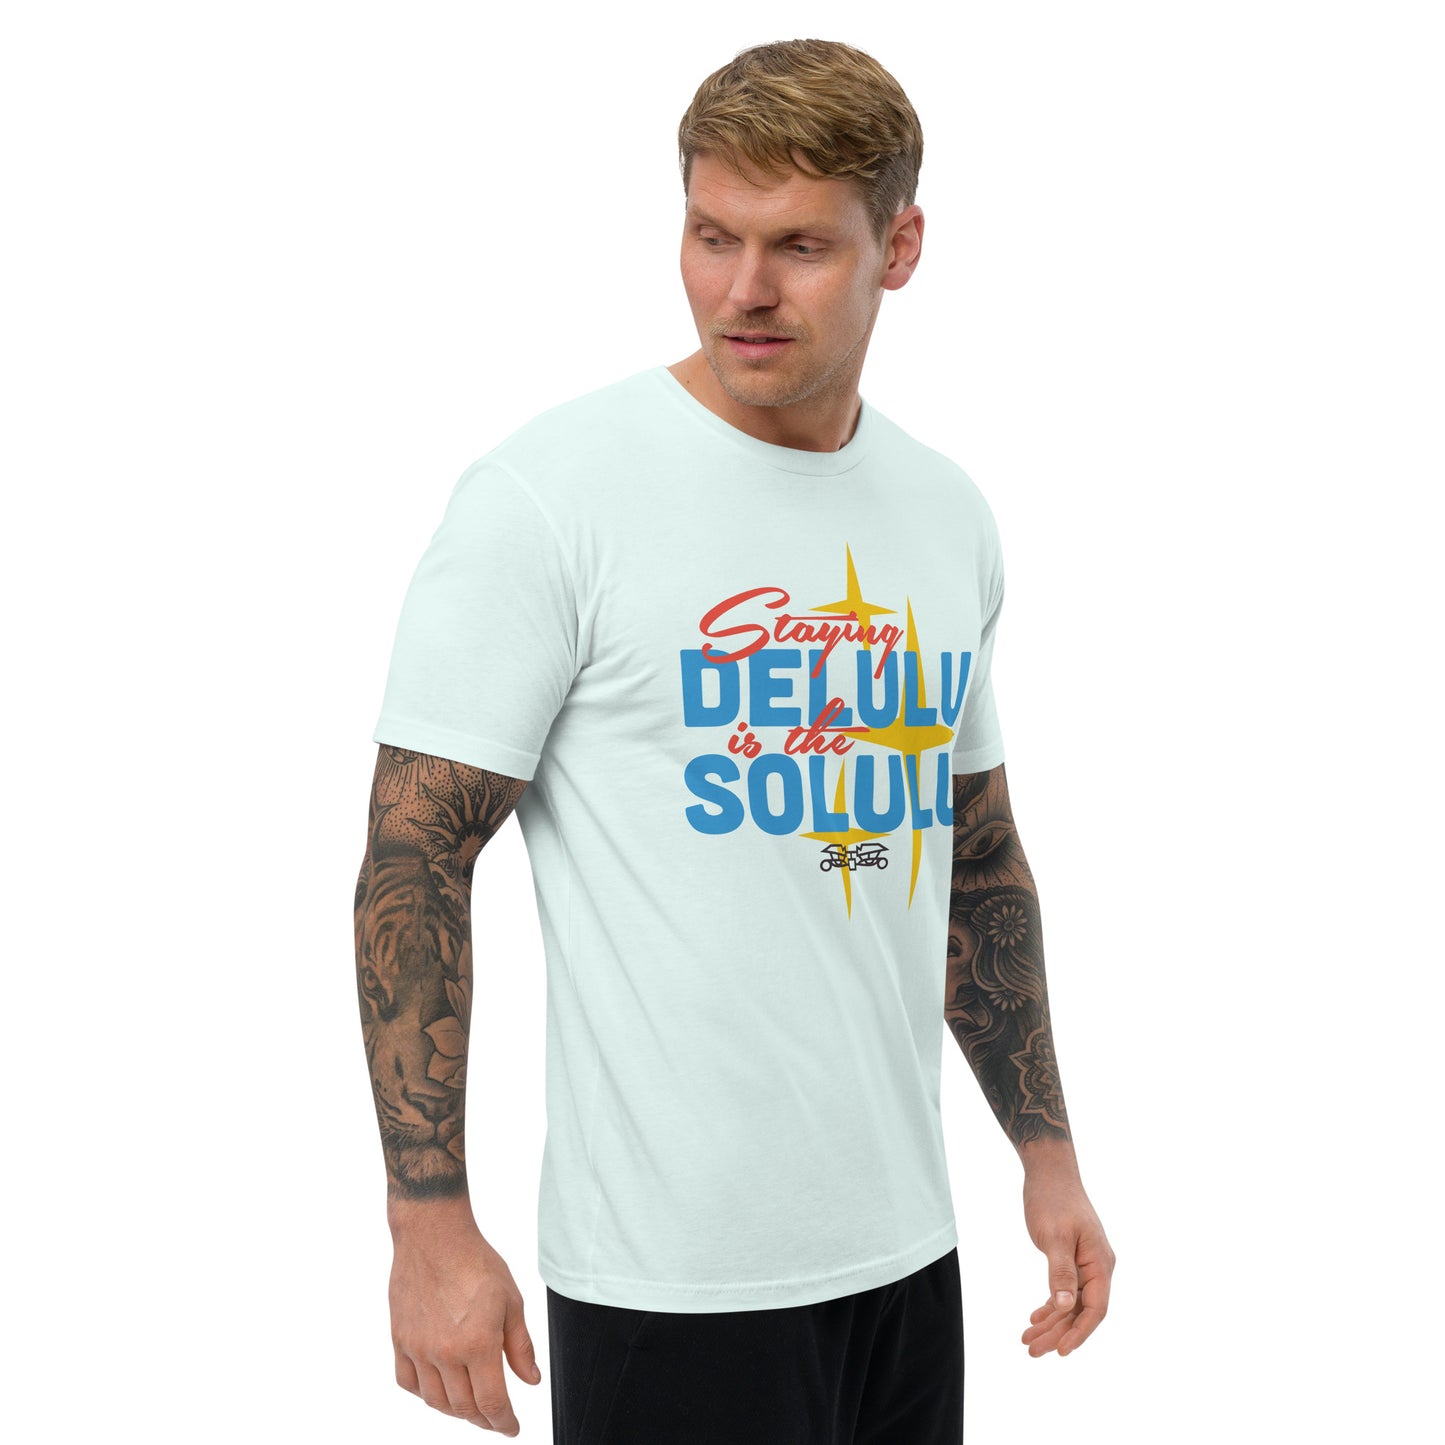 Delulu Shirt